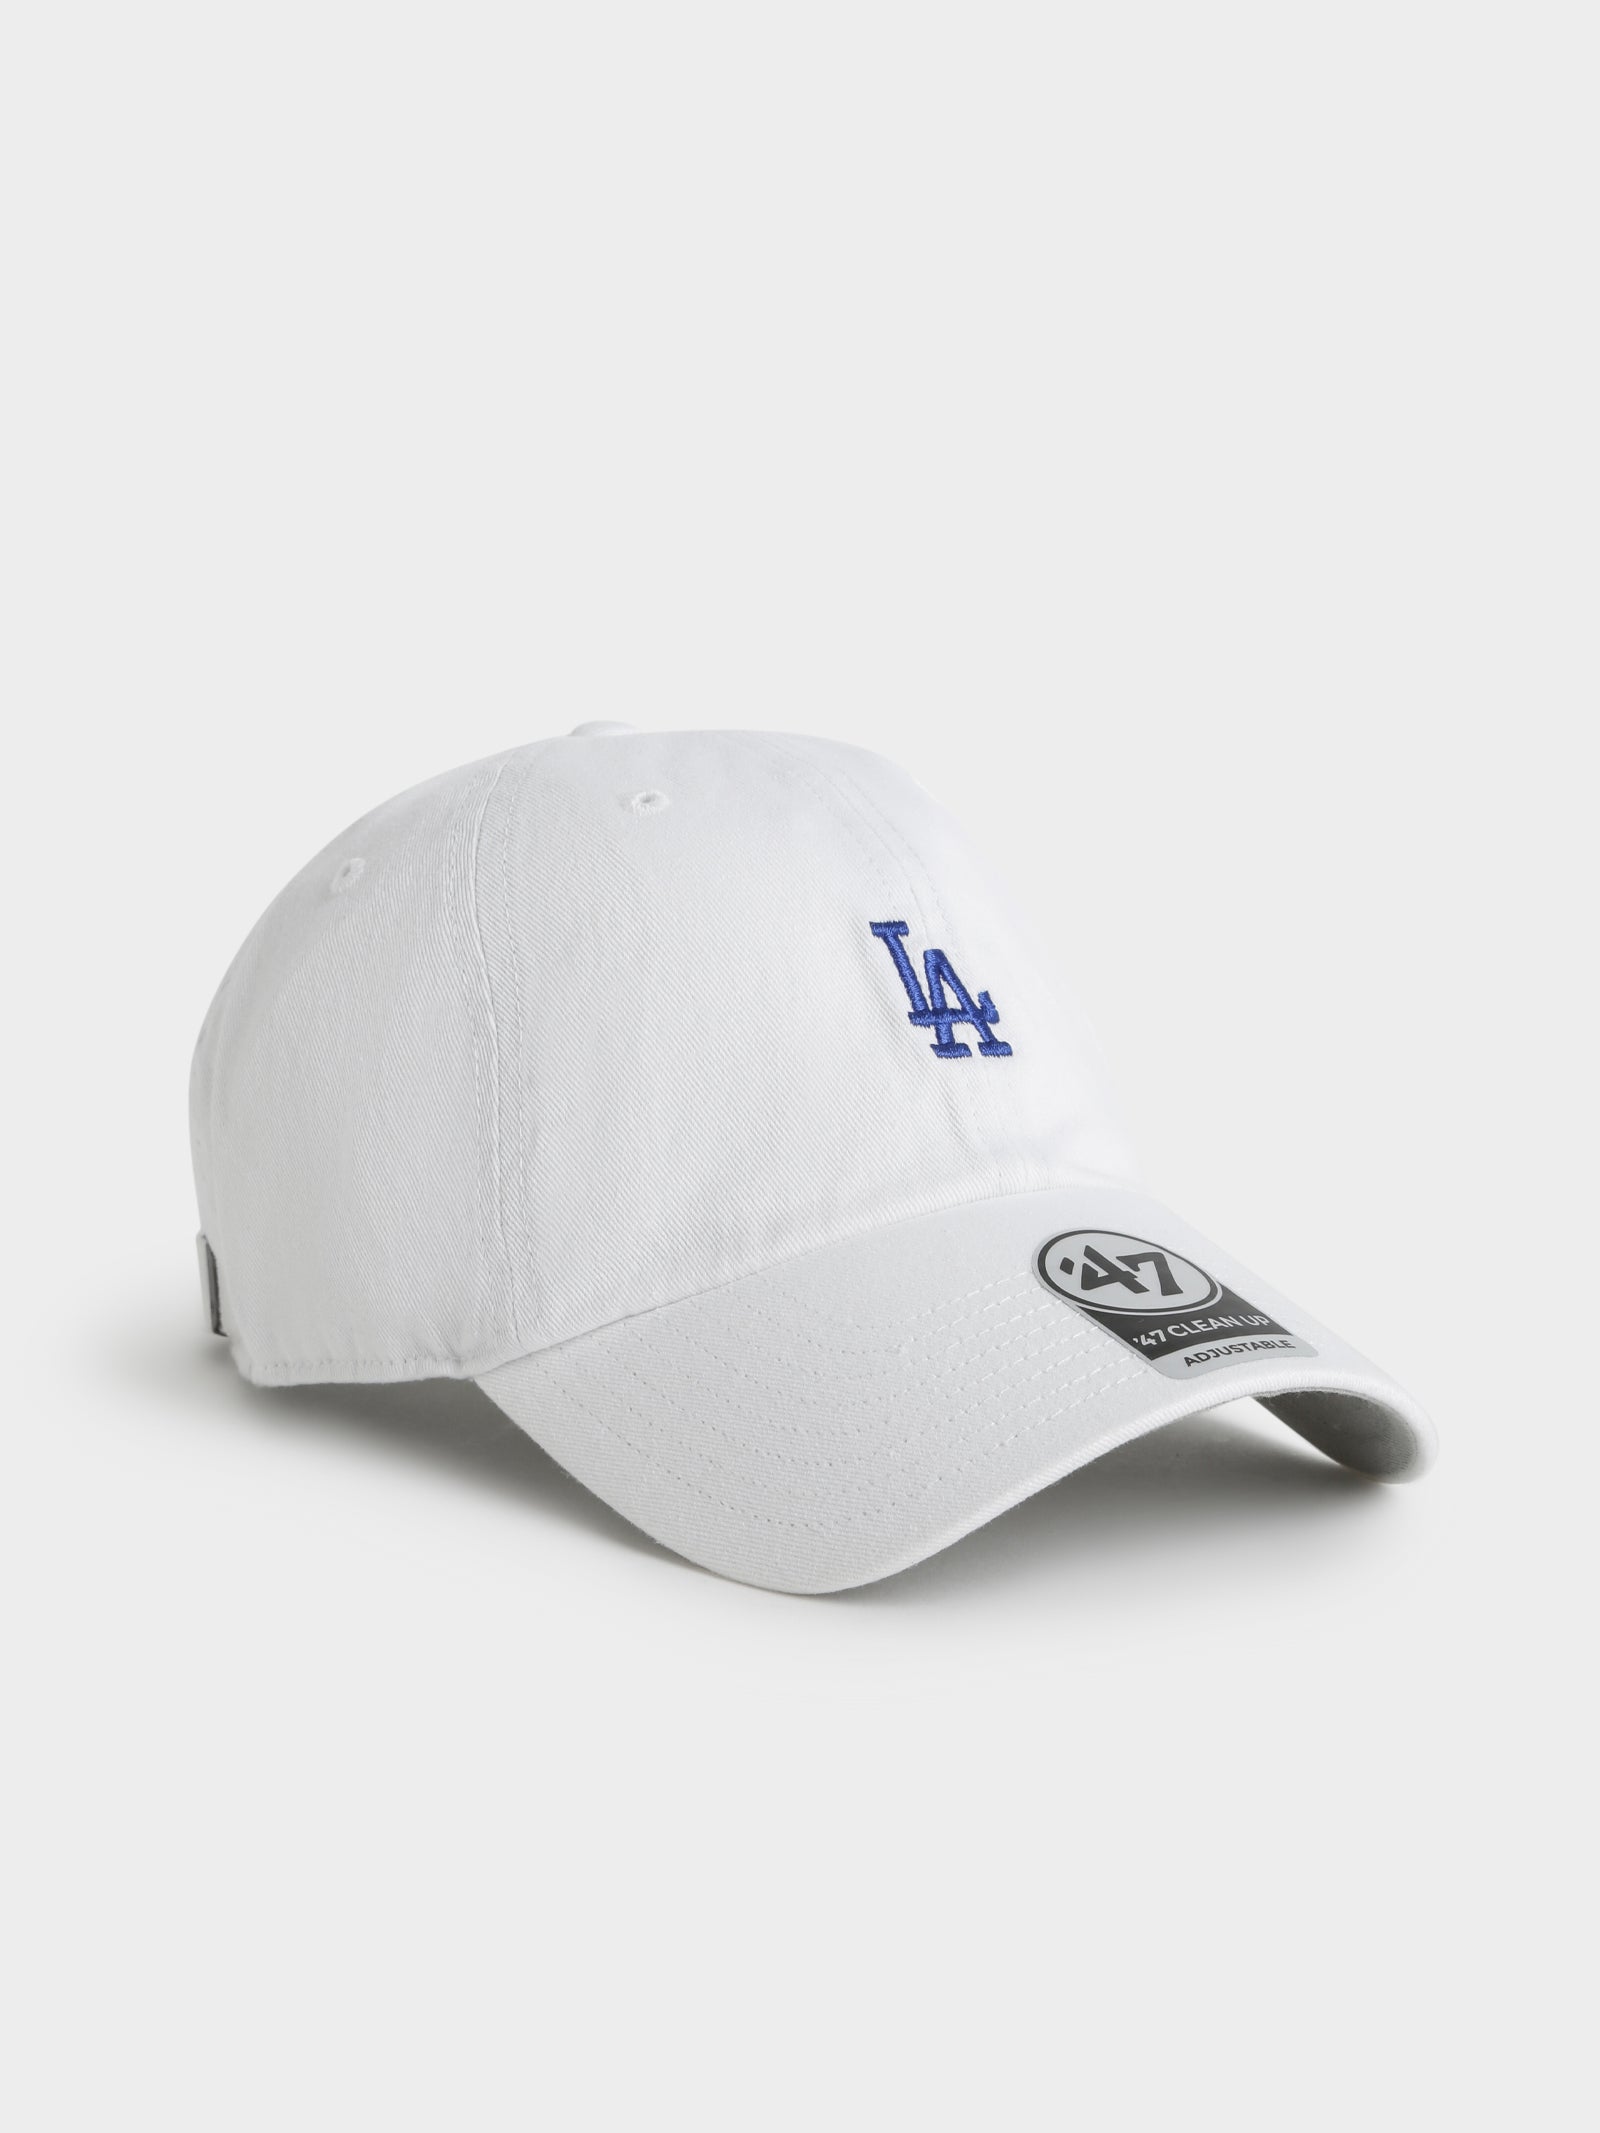 Los Angeles Dodgers Cap in White - Glue Store